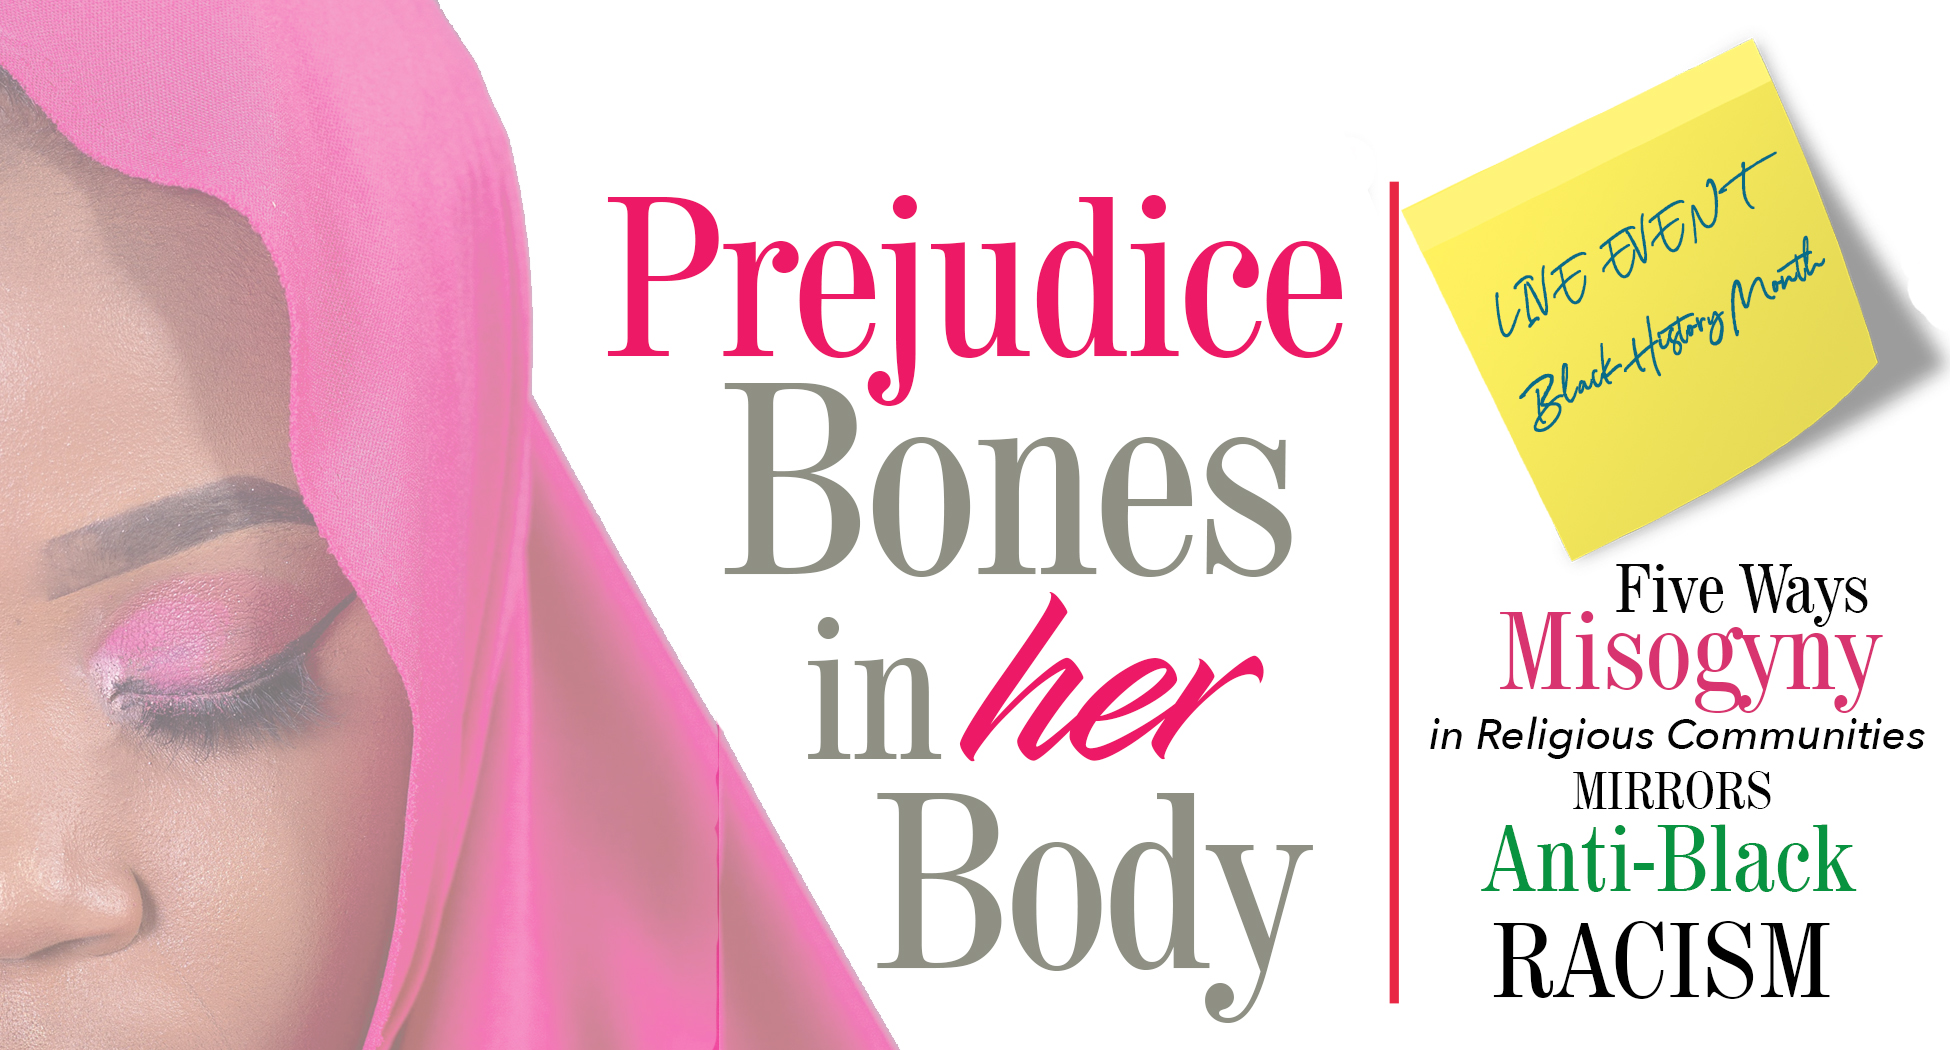 Prejudice Bones in Her Body: Five Ways Misogyny in Religious Communities Mirrors Anti-Black Racism